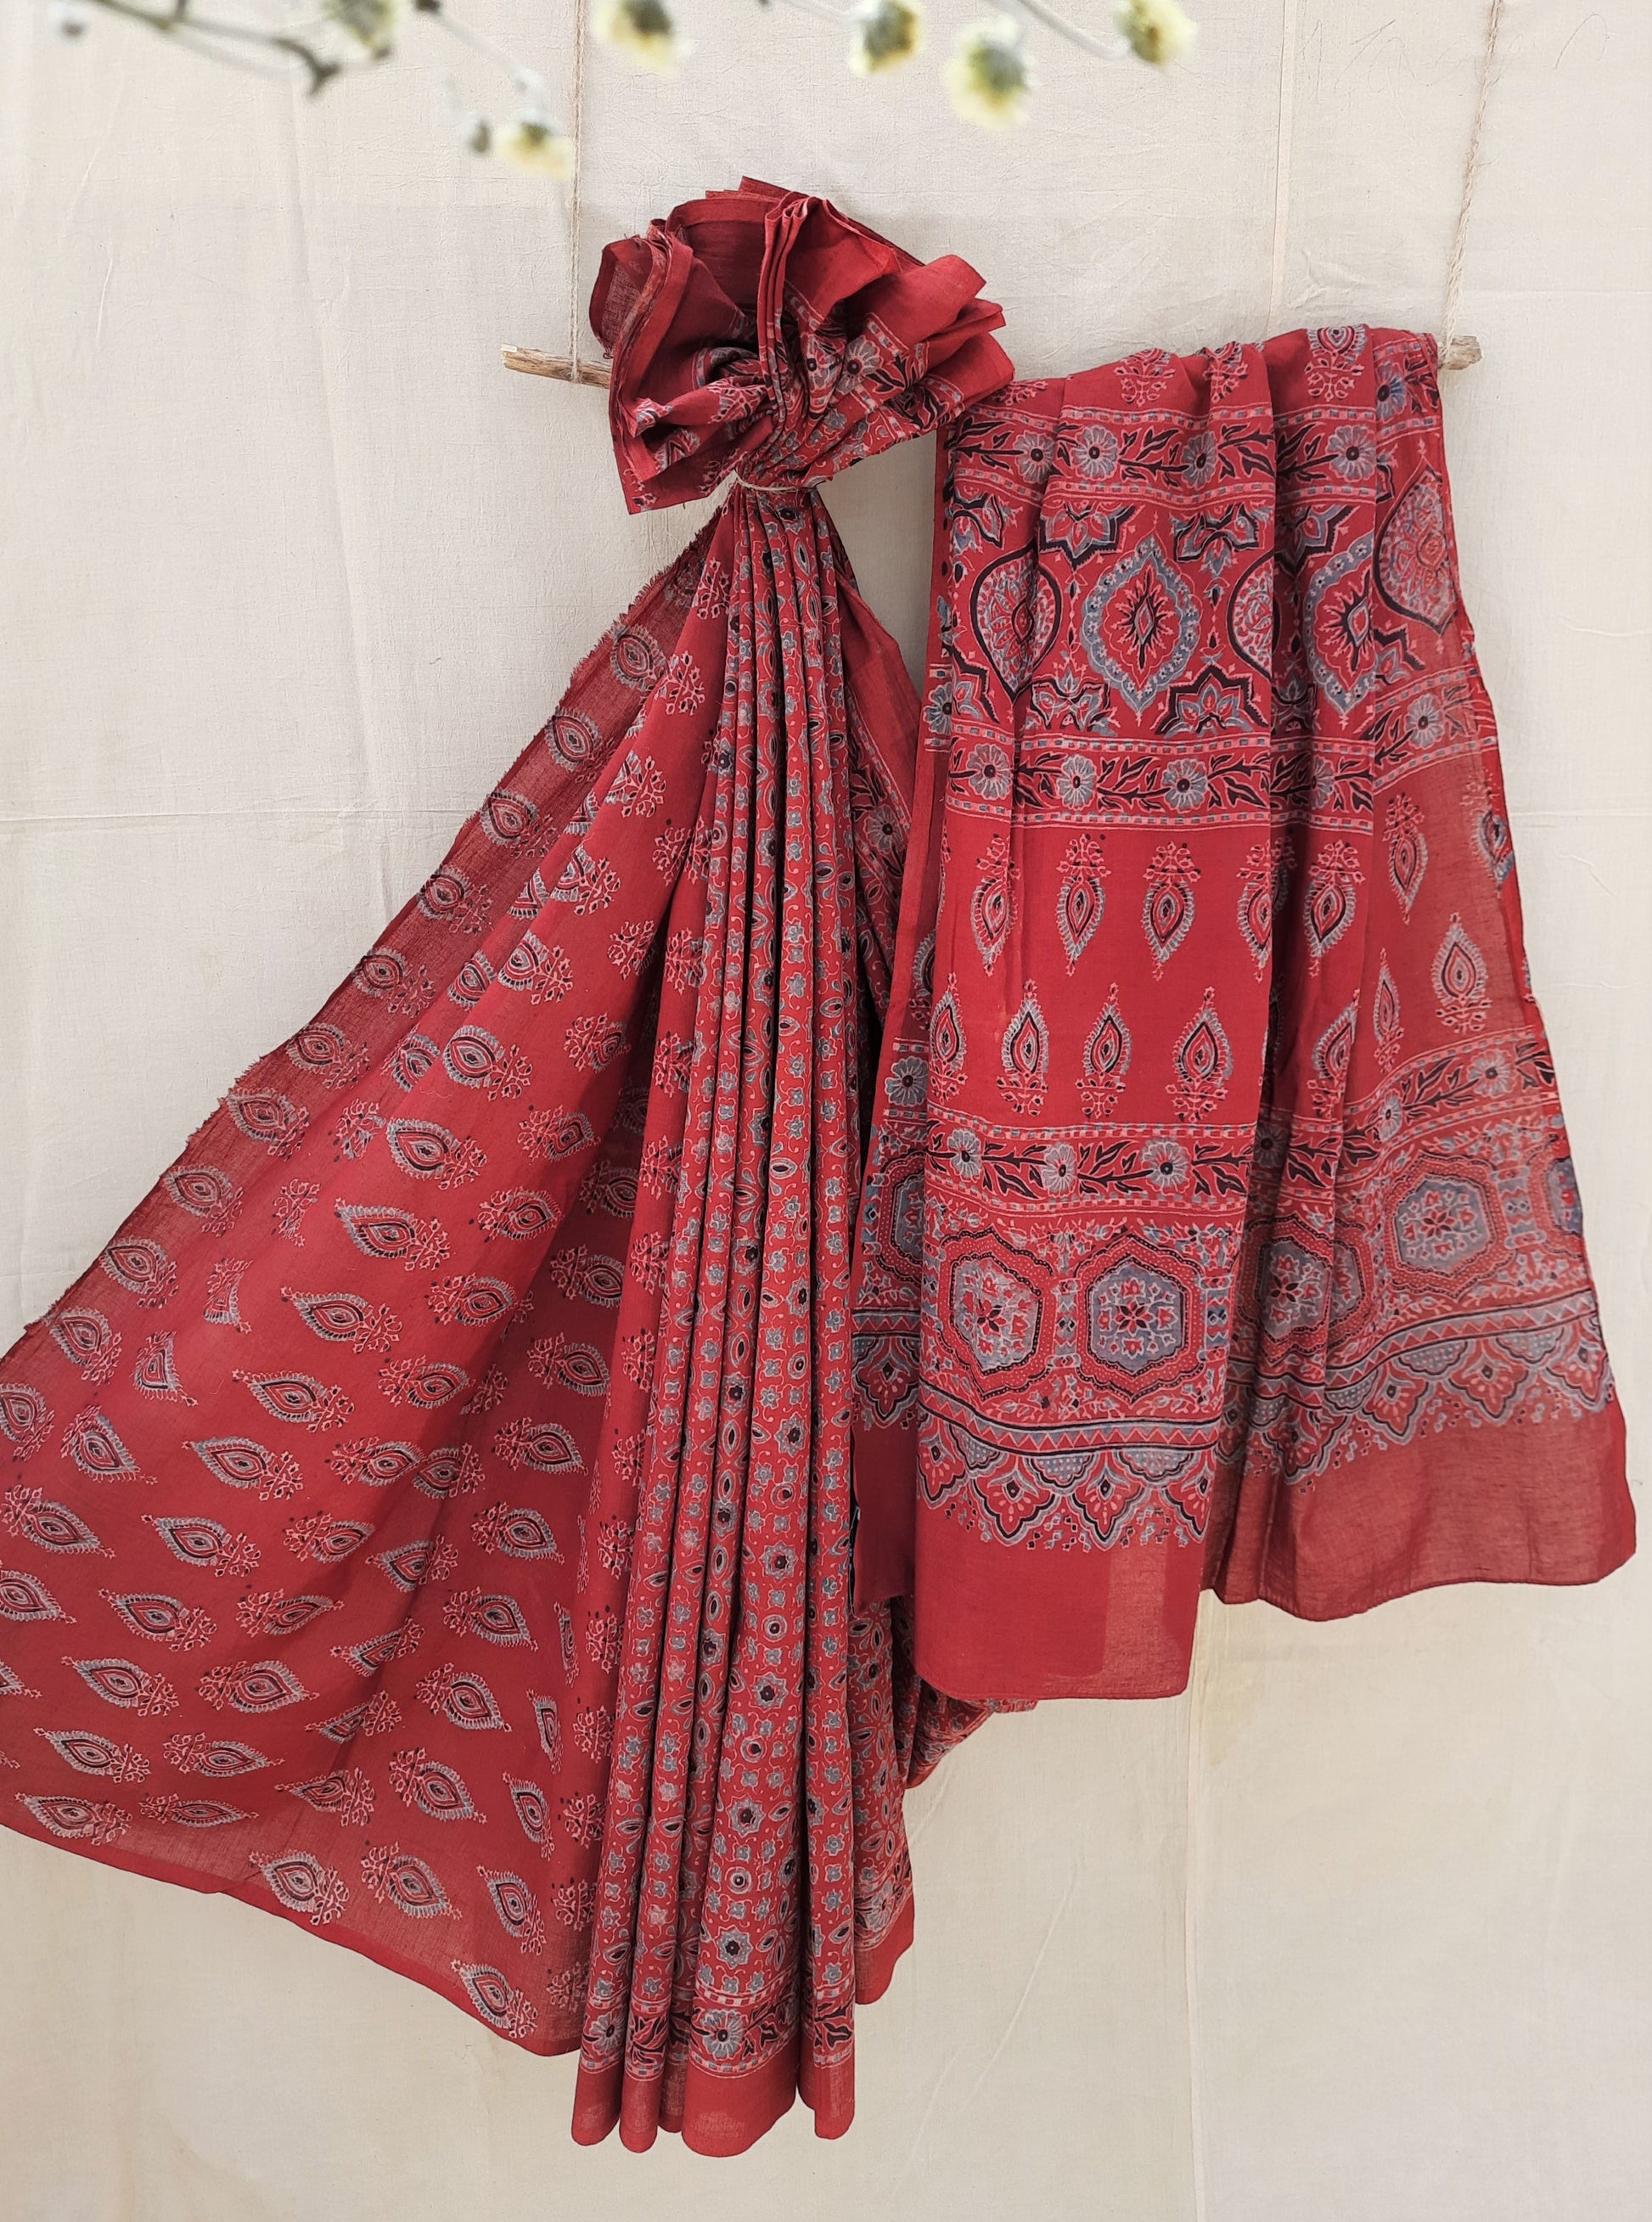 Madder red ajrakh saree, Ajrakh hand block print cotton saree, Madder red ajrakh prints sari